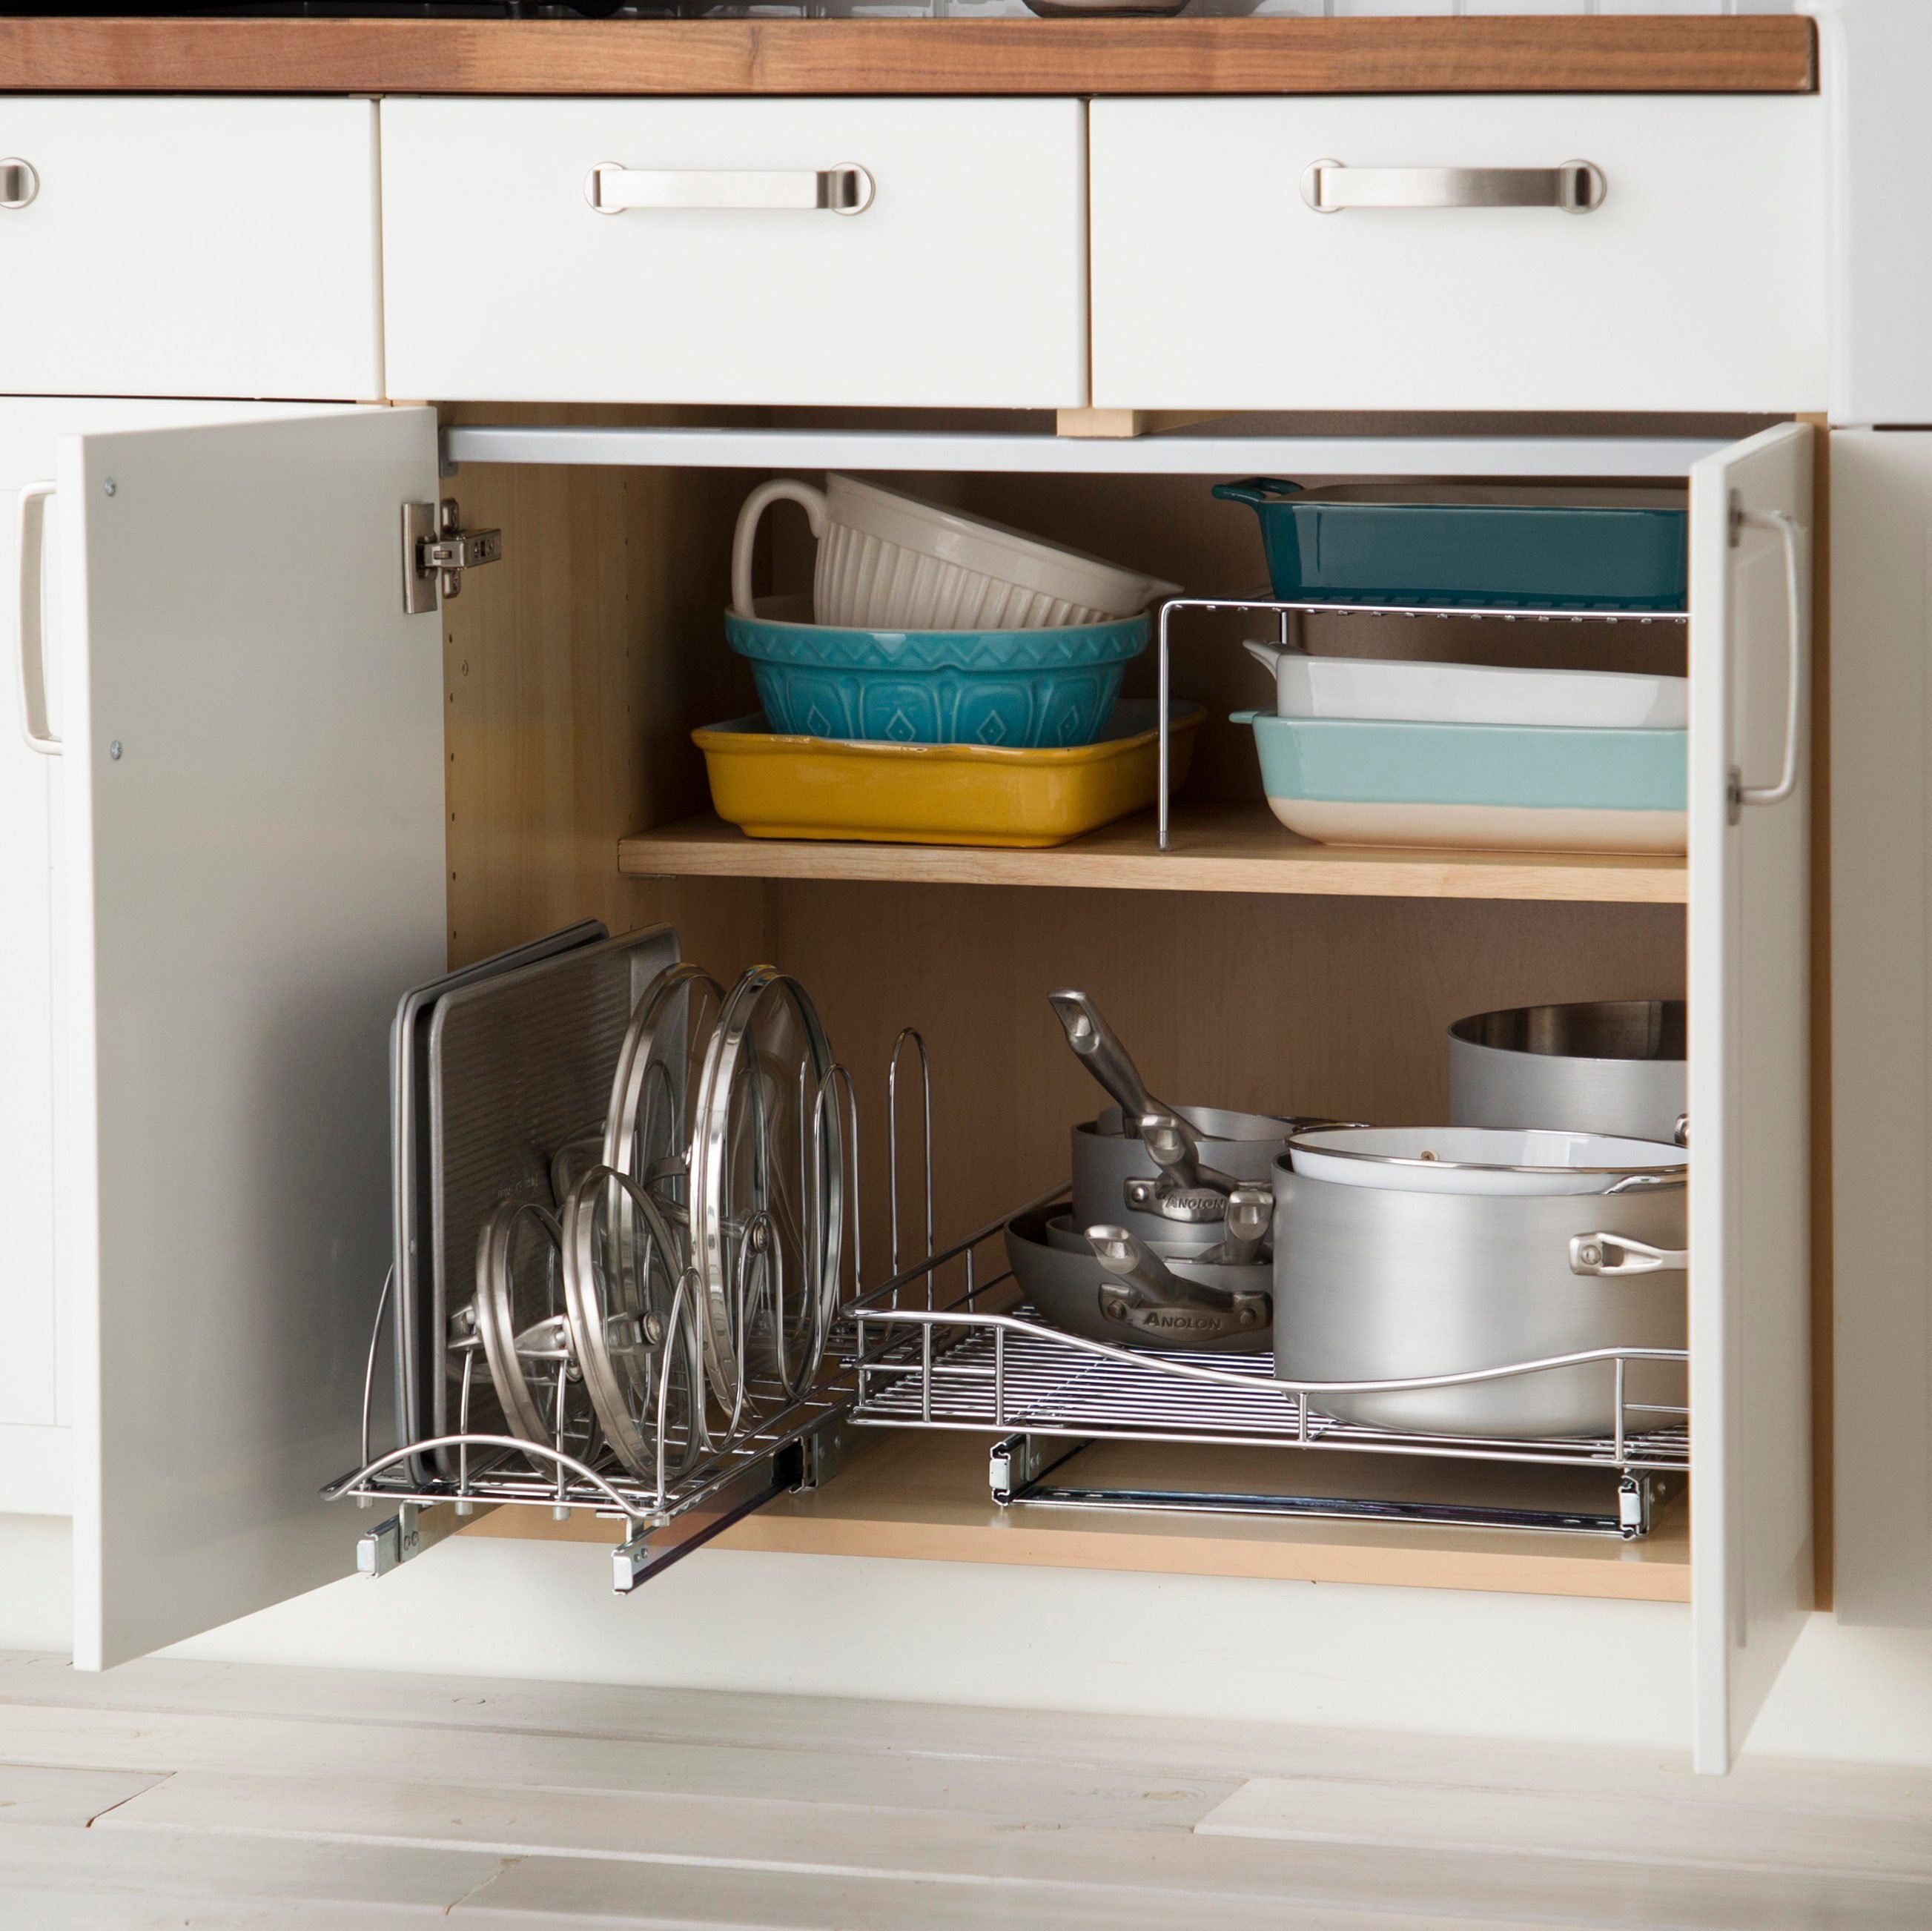 20 Kitchen Storage Ideas That Will Free Up So Much Space